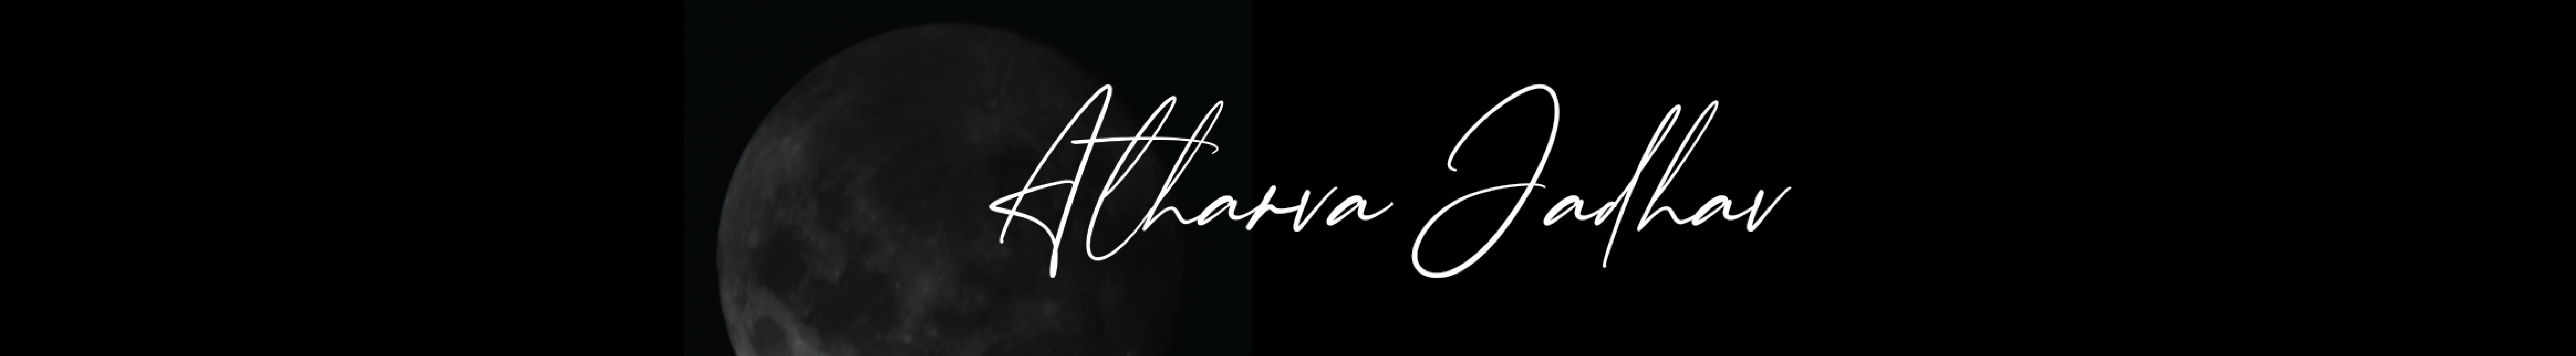 Atharva Jadhav's profile banner